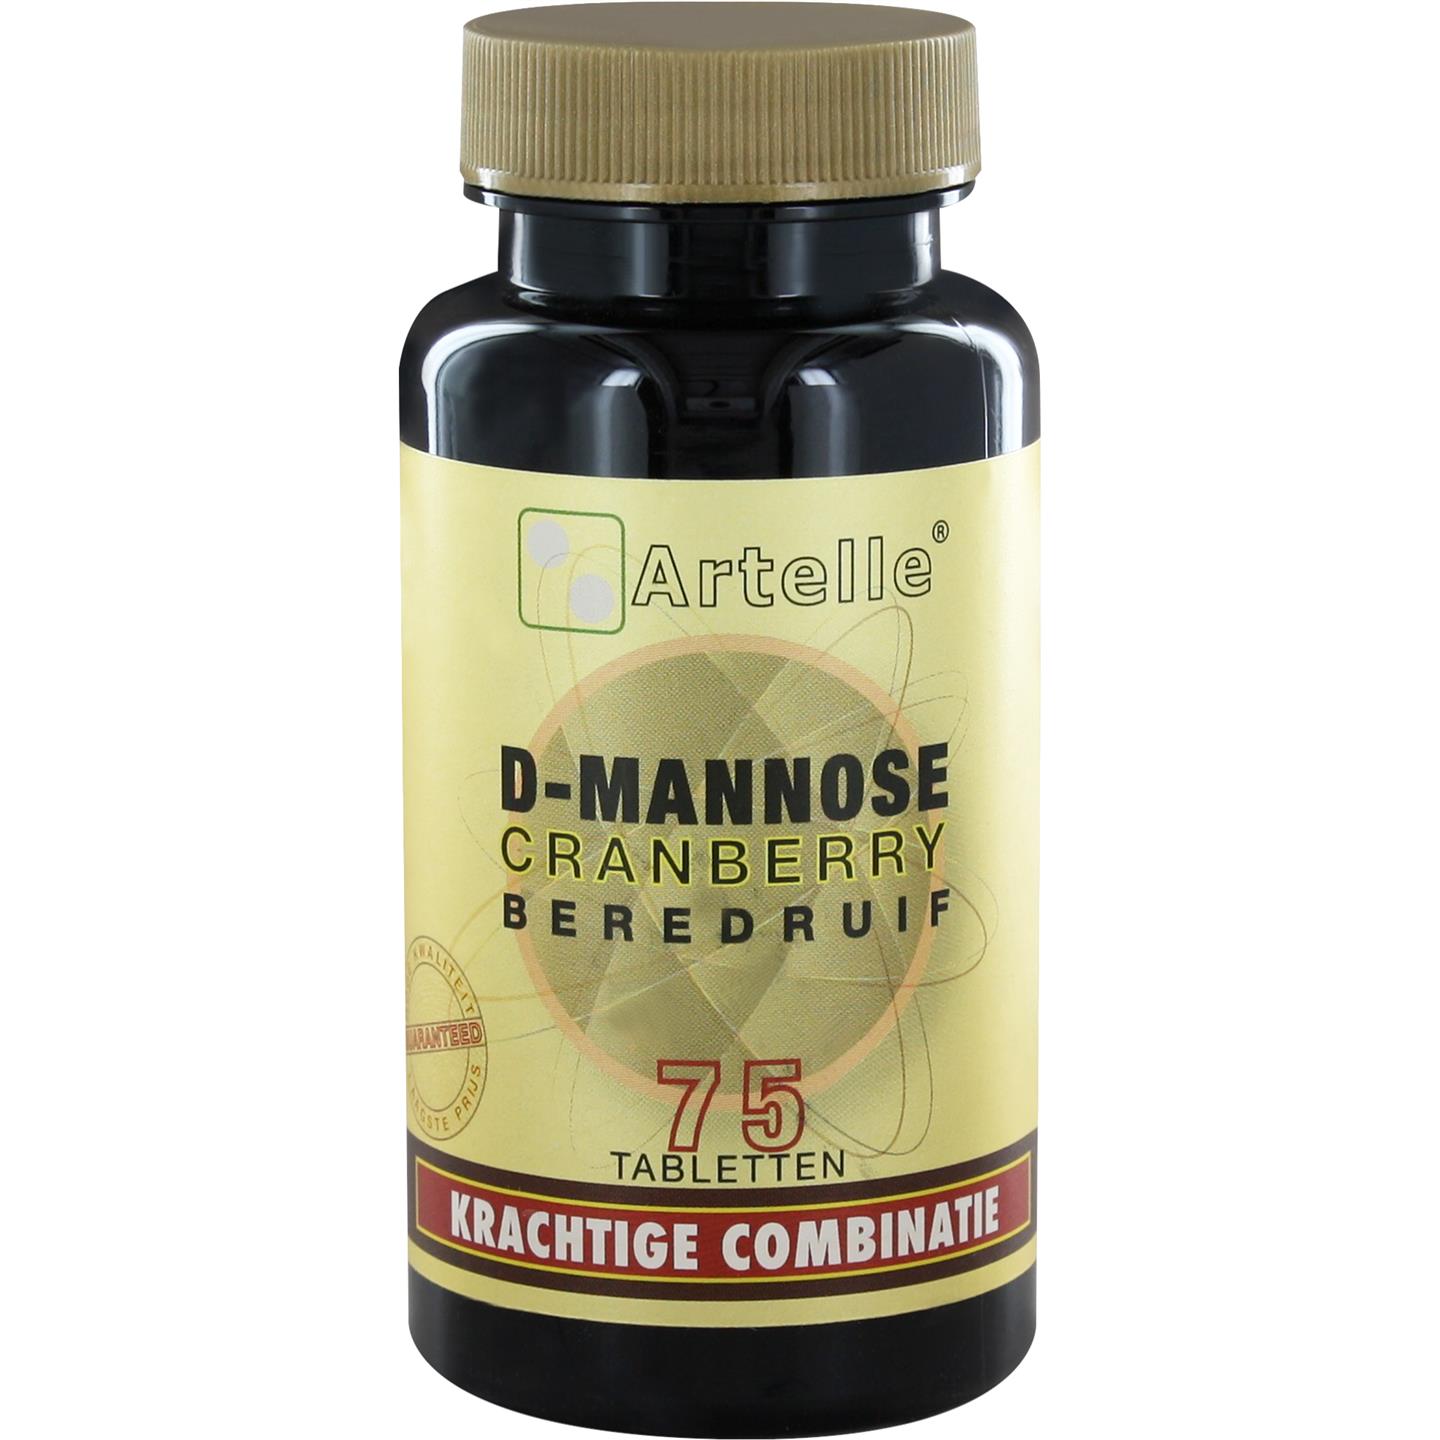 D-Mannose Cranberry Beredruif